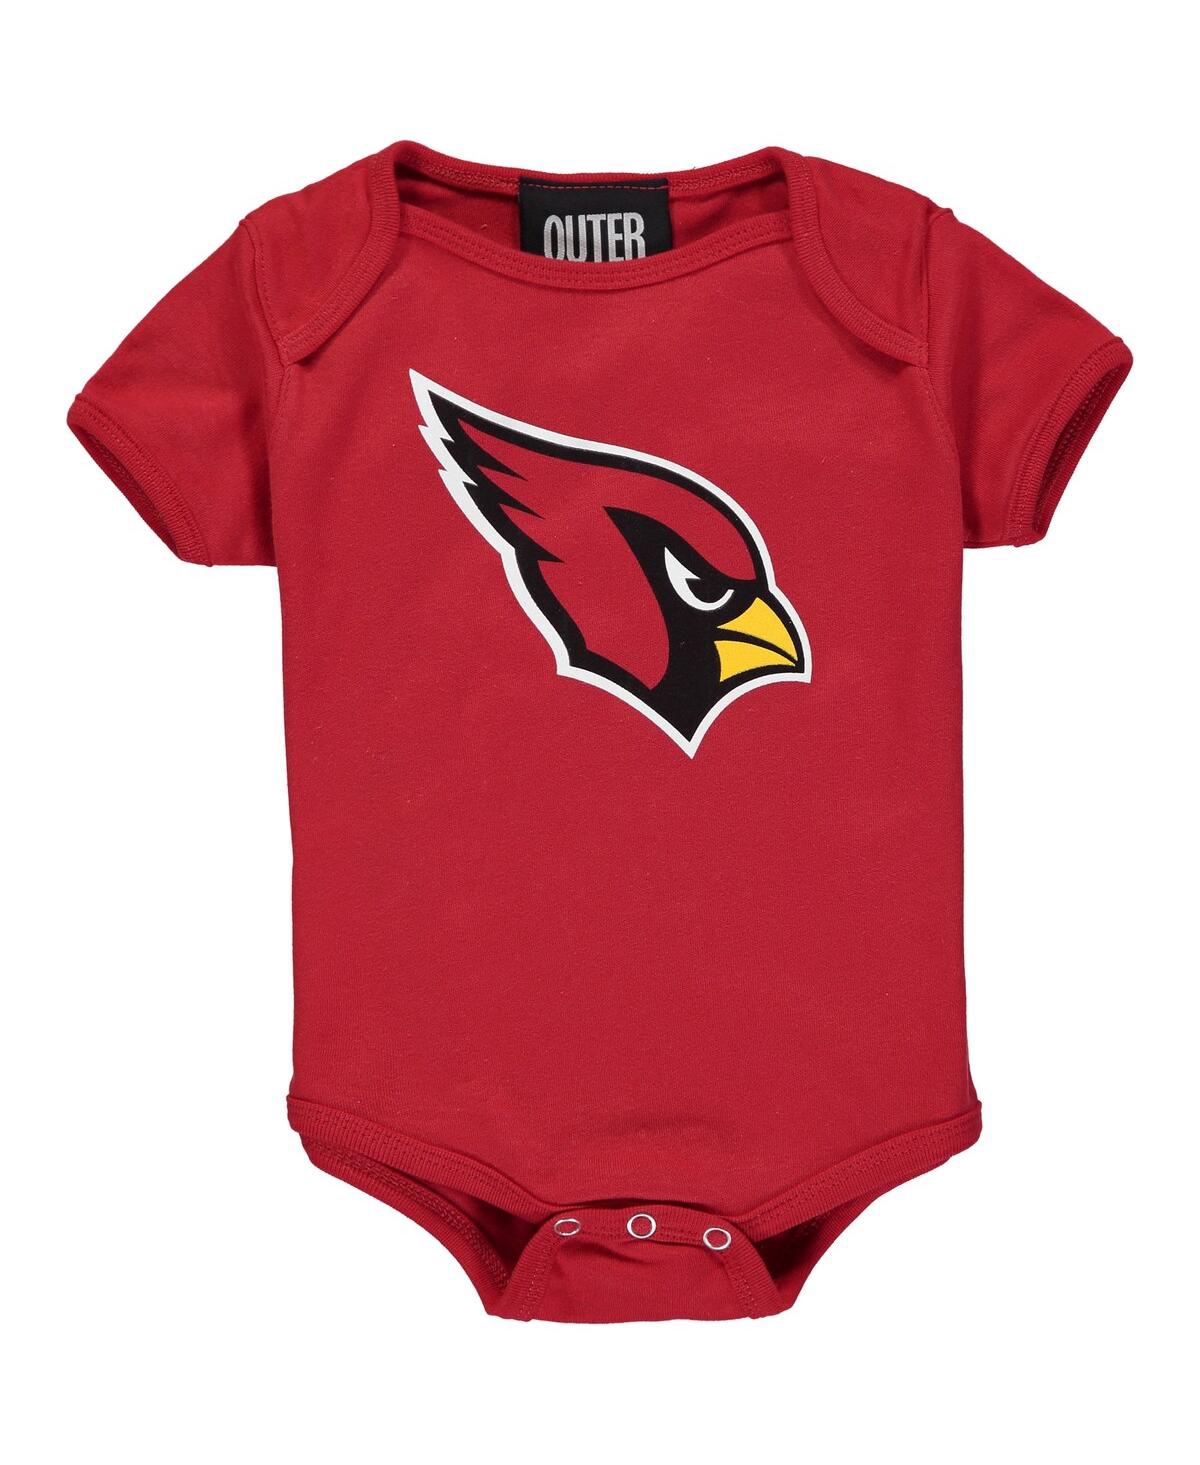 Outerstuff Babies' Newborn And Infant Boys And Girls Red Arizona Diamondbacks Primary Team Logo Bodysuit In Cardinal